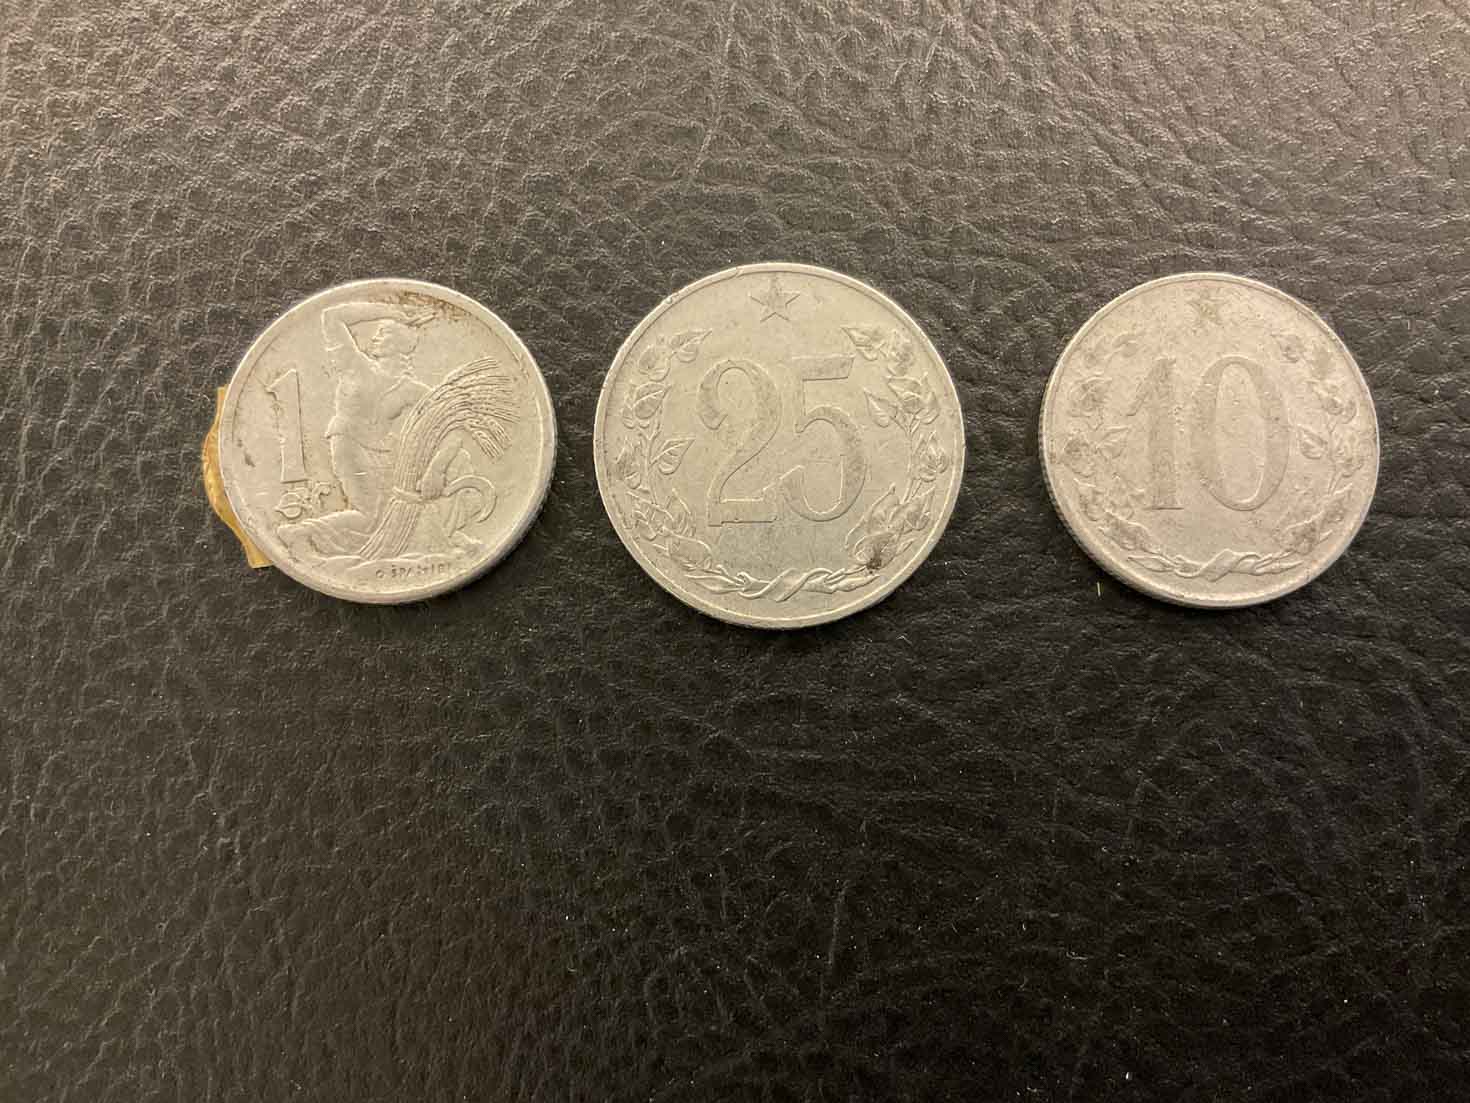 1 koruna, 25 haléřů, 10 haléřů - Československo